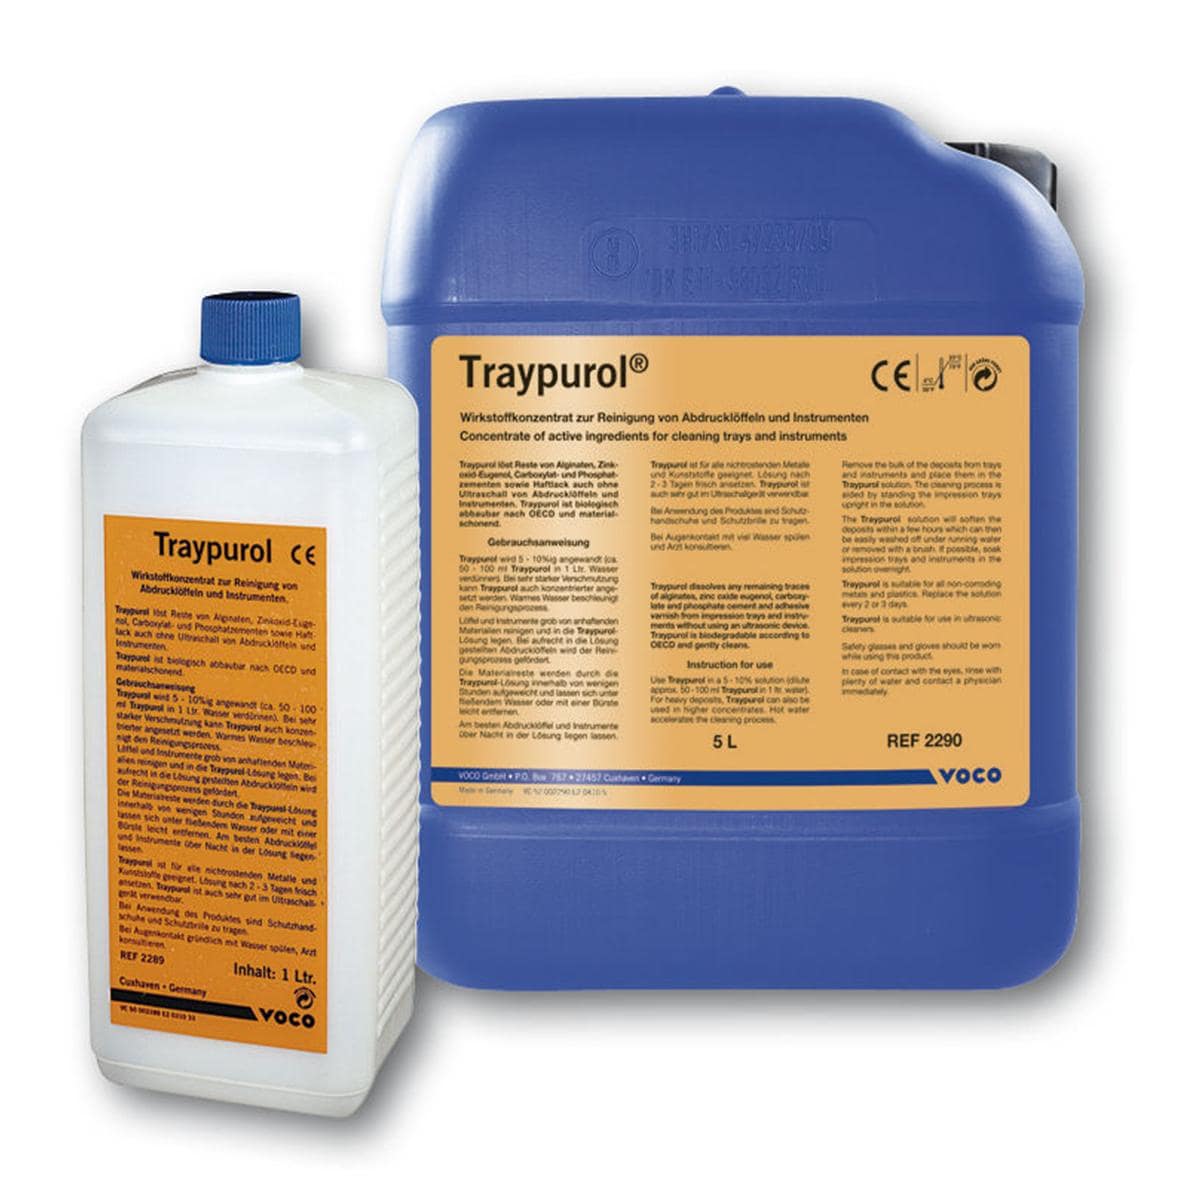 Traypurol - Can, 5 liter